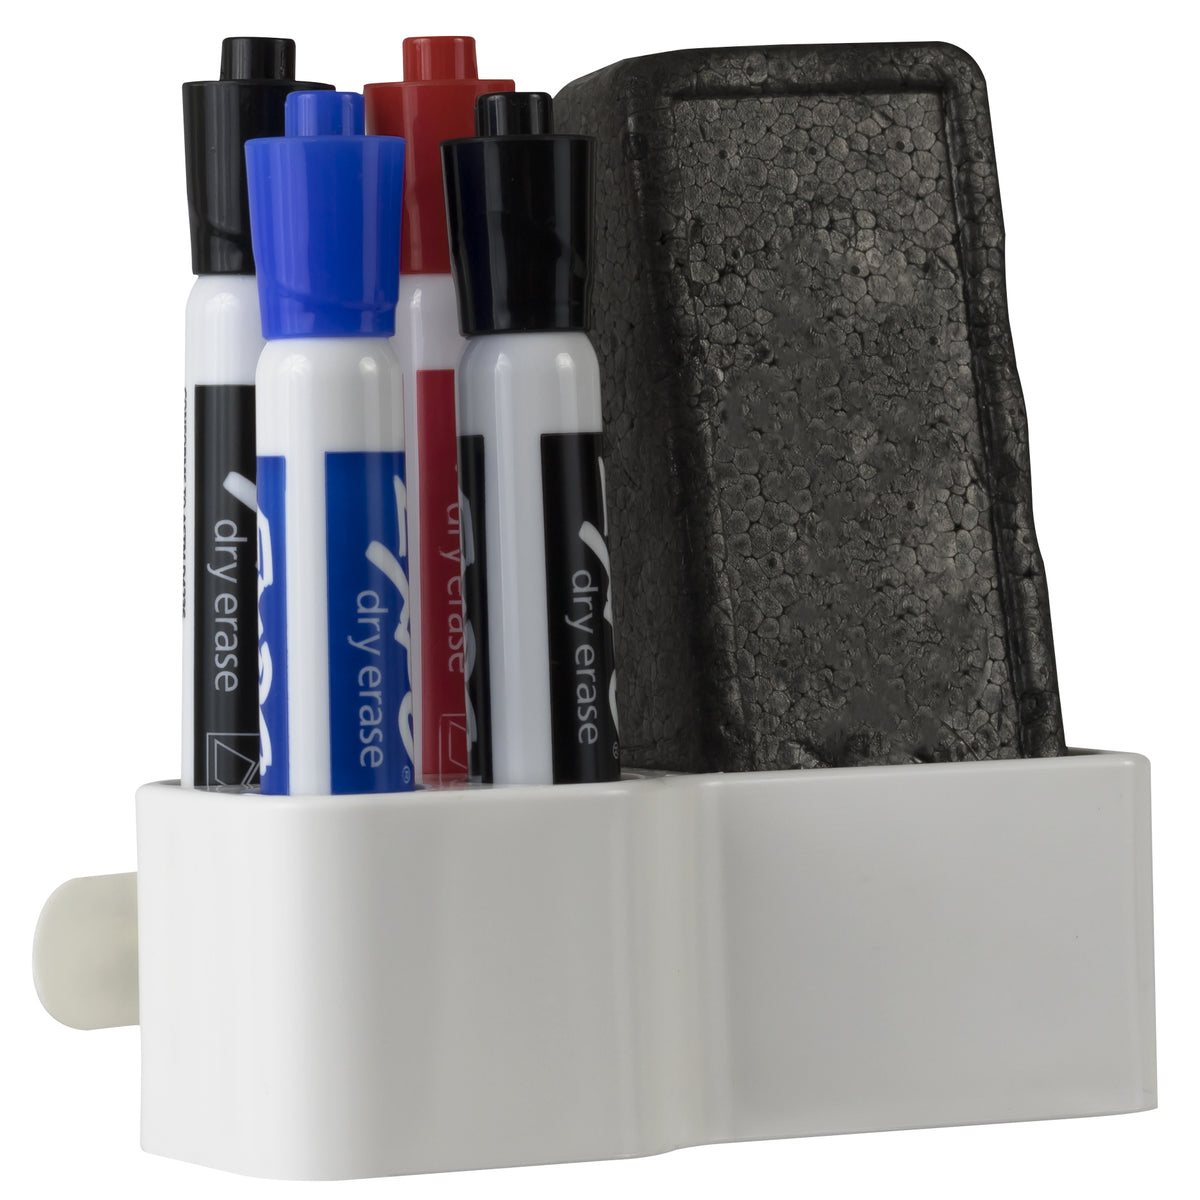 Dry Erase White Board Marker and Eraser Holder